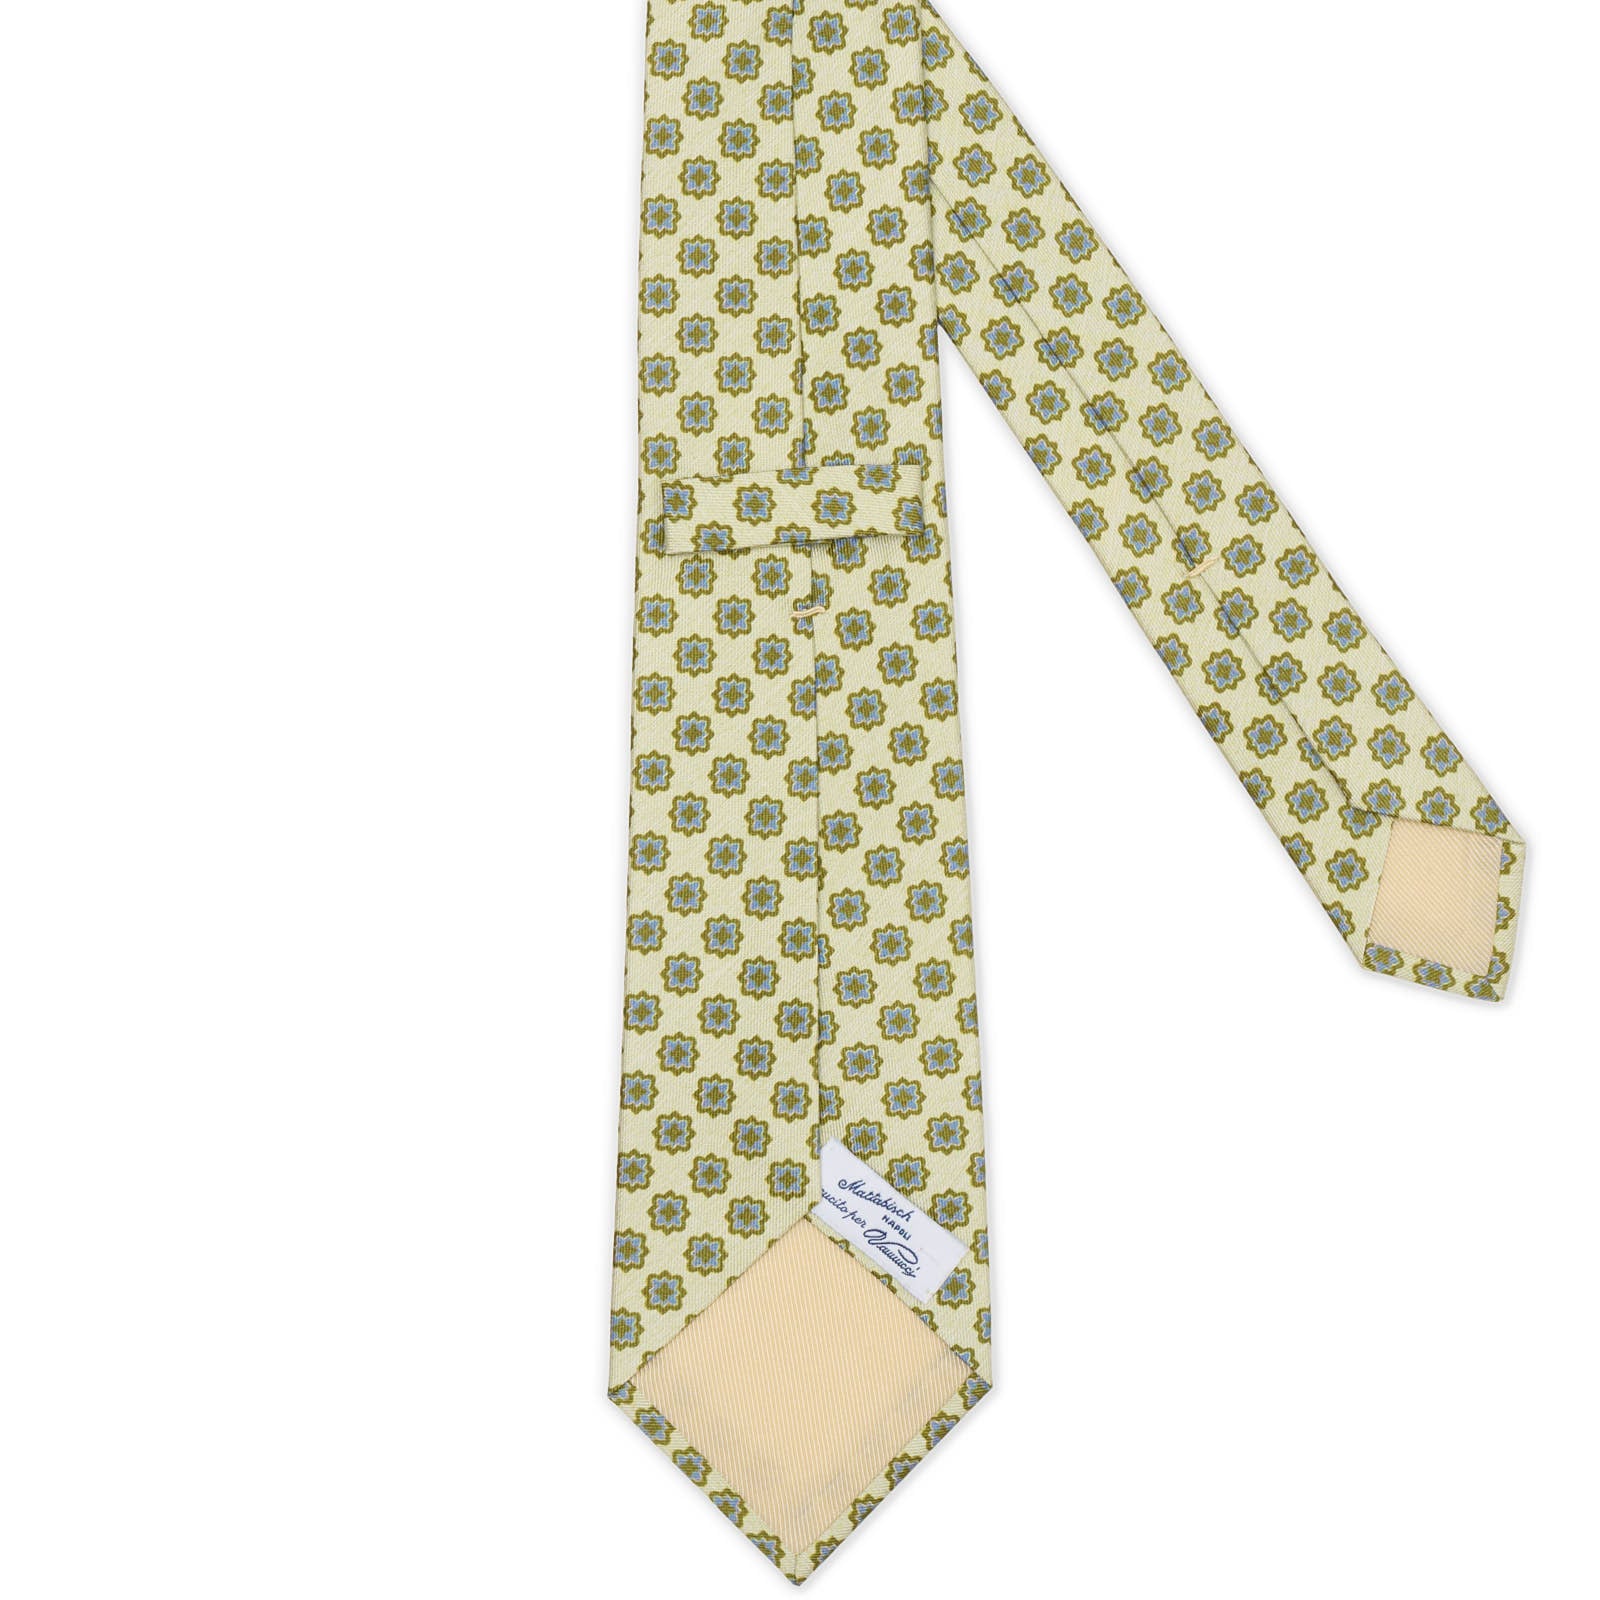 MATTABISCH FOR VANNUCCI Light Green Medallion Seven Fold Silk Tie NEW